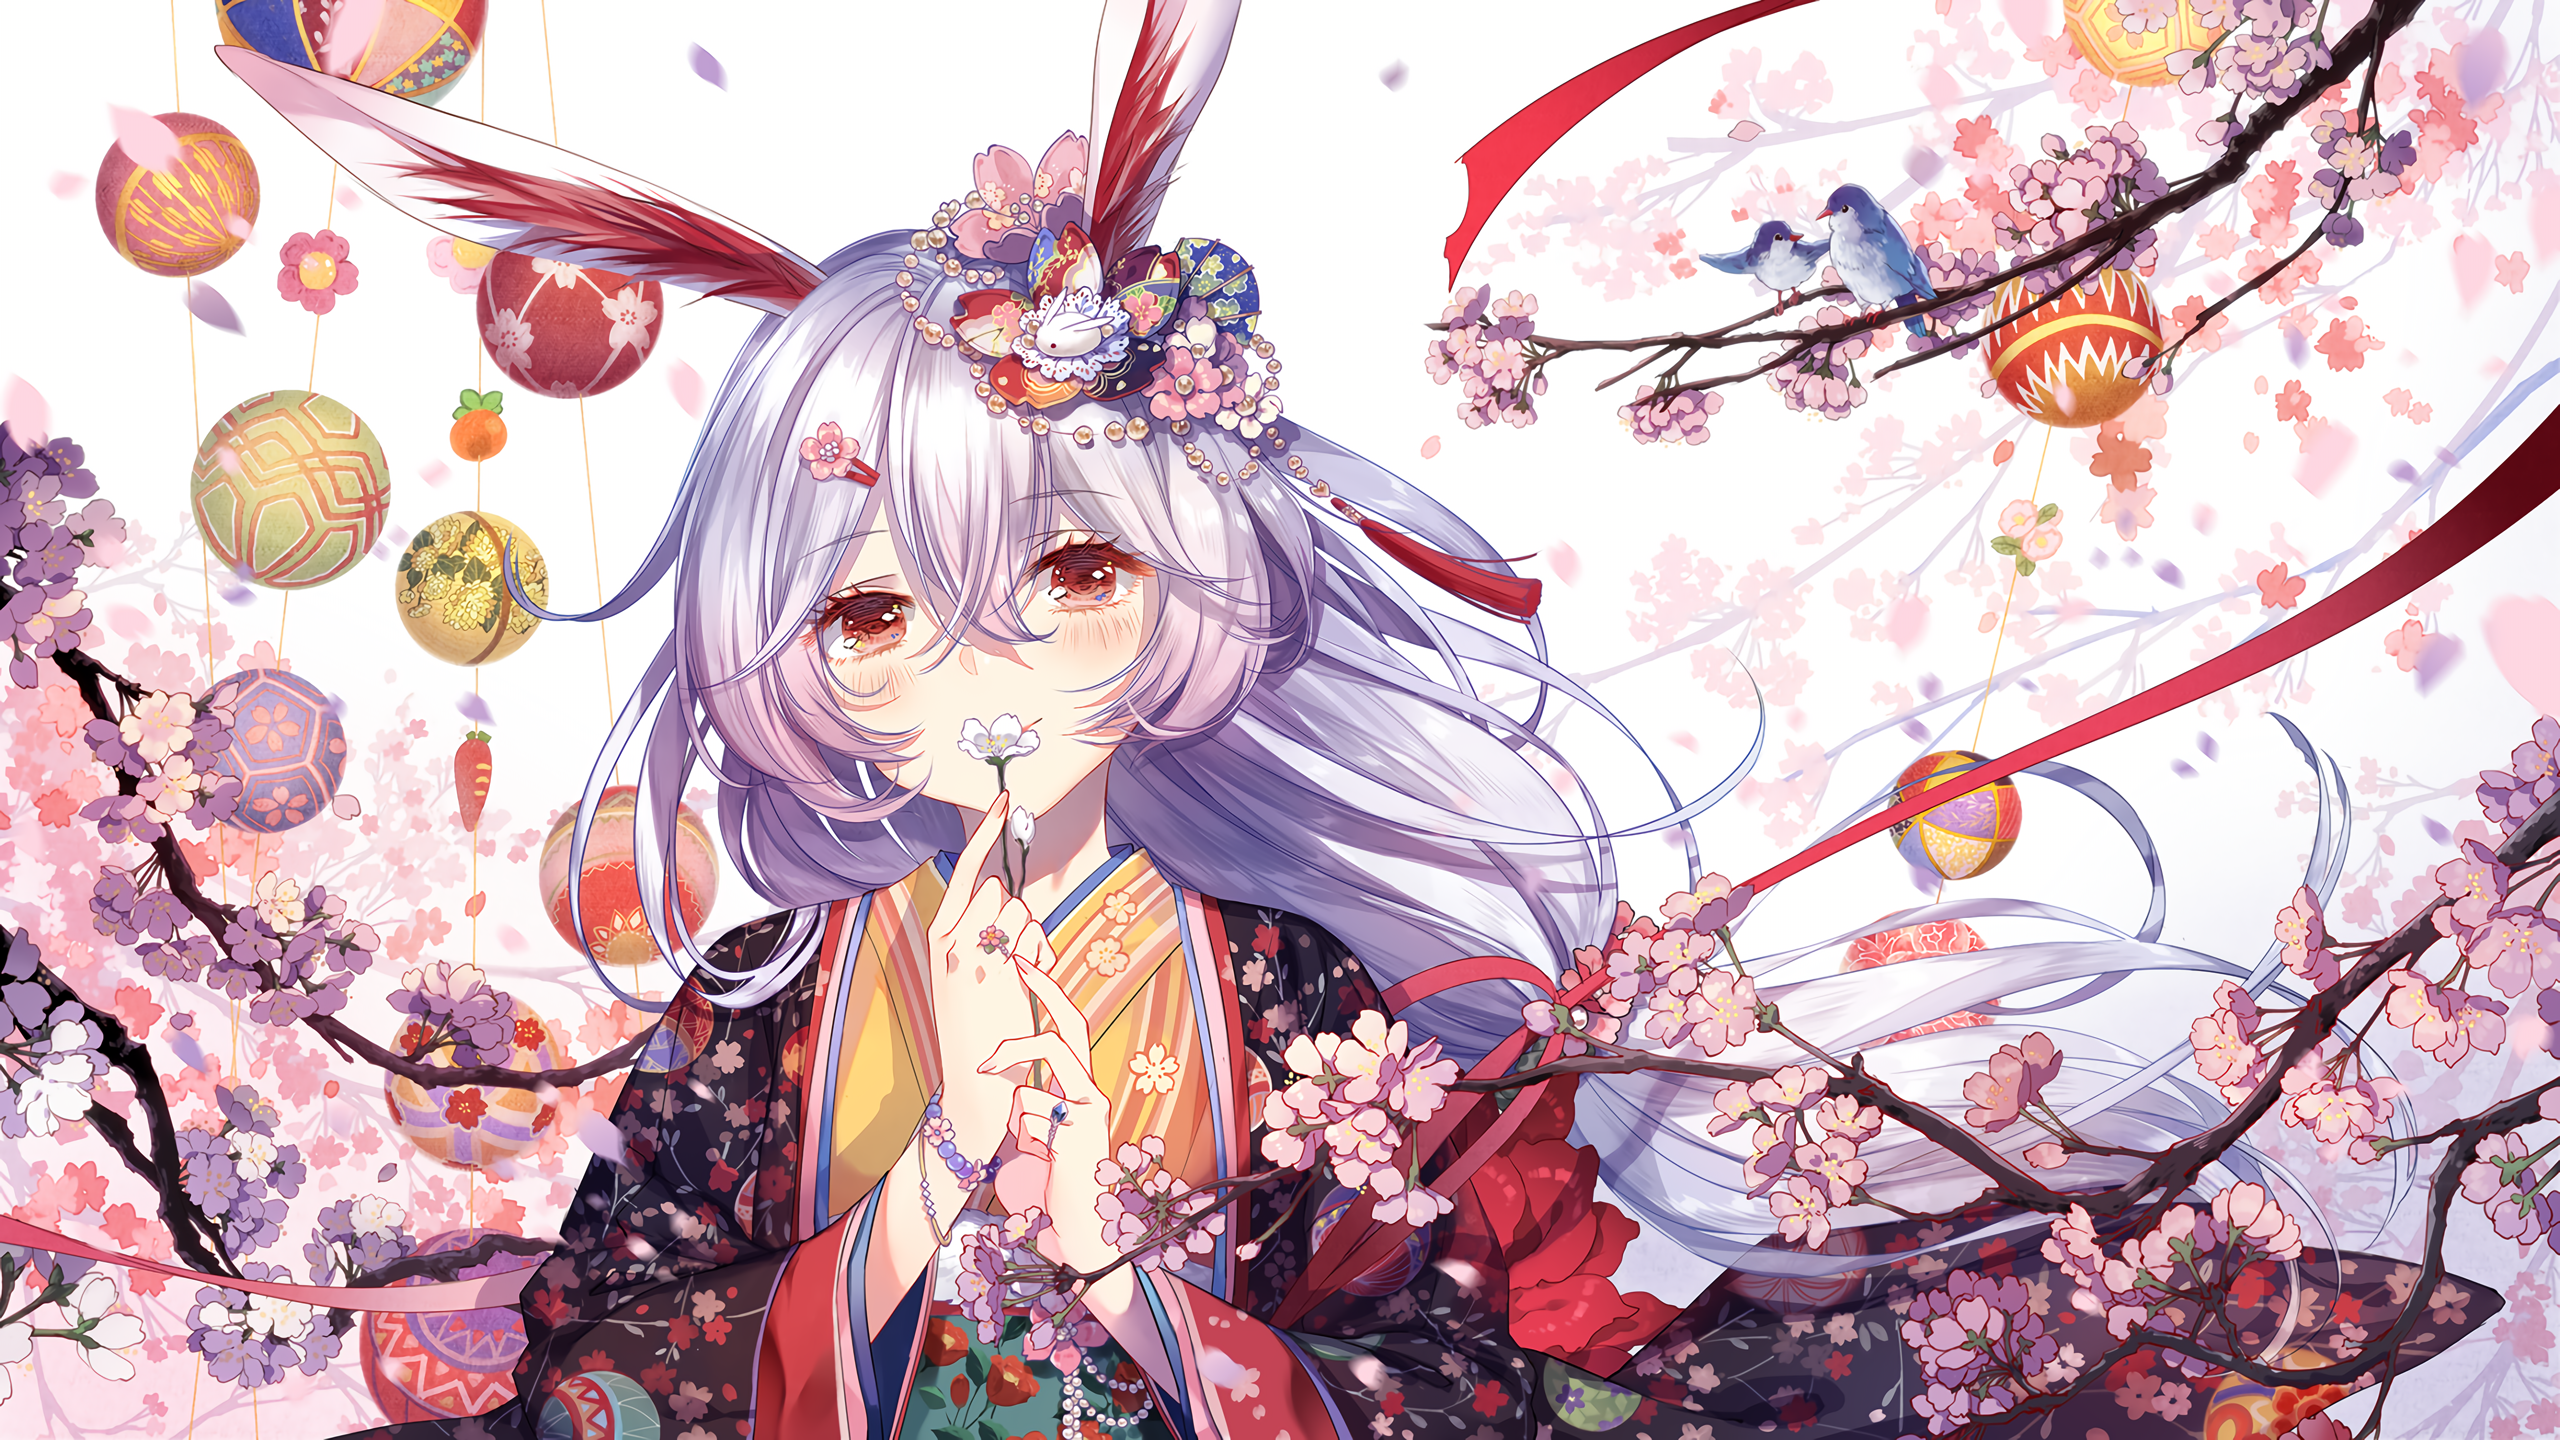 Anime Anime Girls Theresa Apocalypse Red Eyes Petals Kimono Long Hair Barrette Ribbons Flowers Wrist 2560x1440